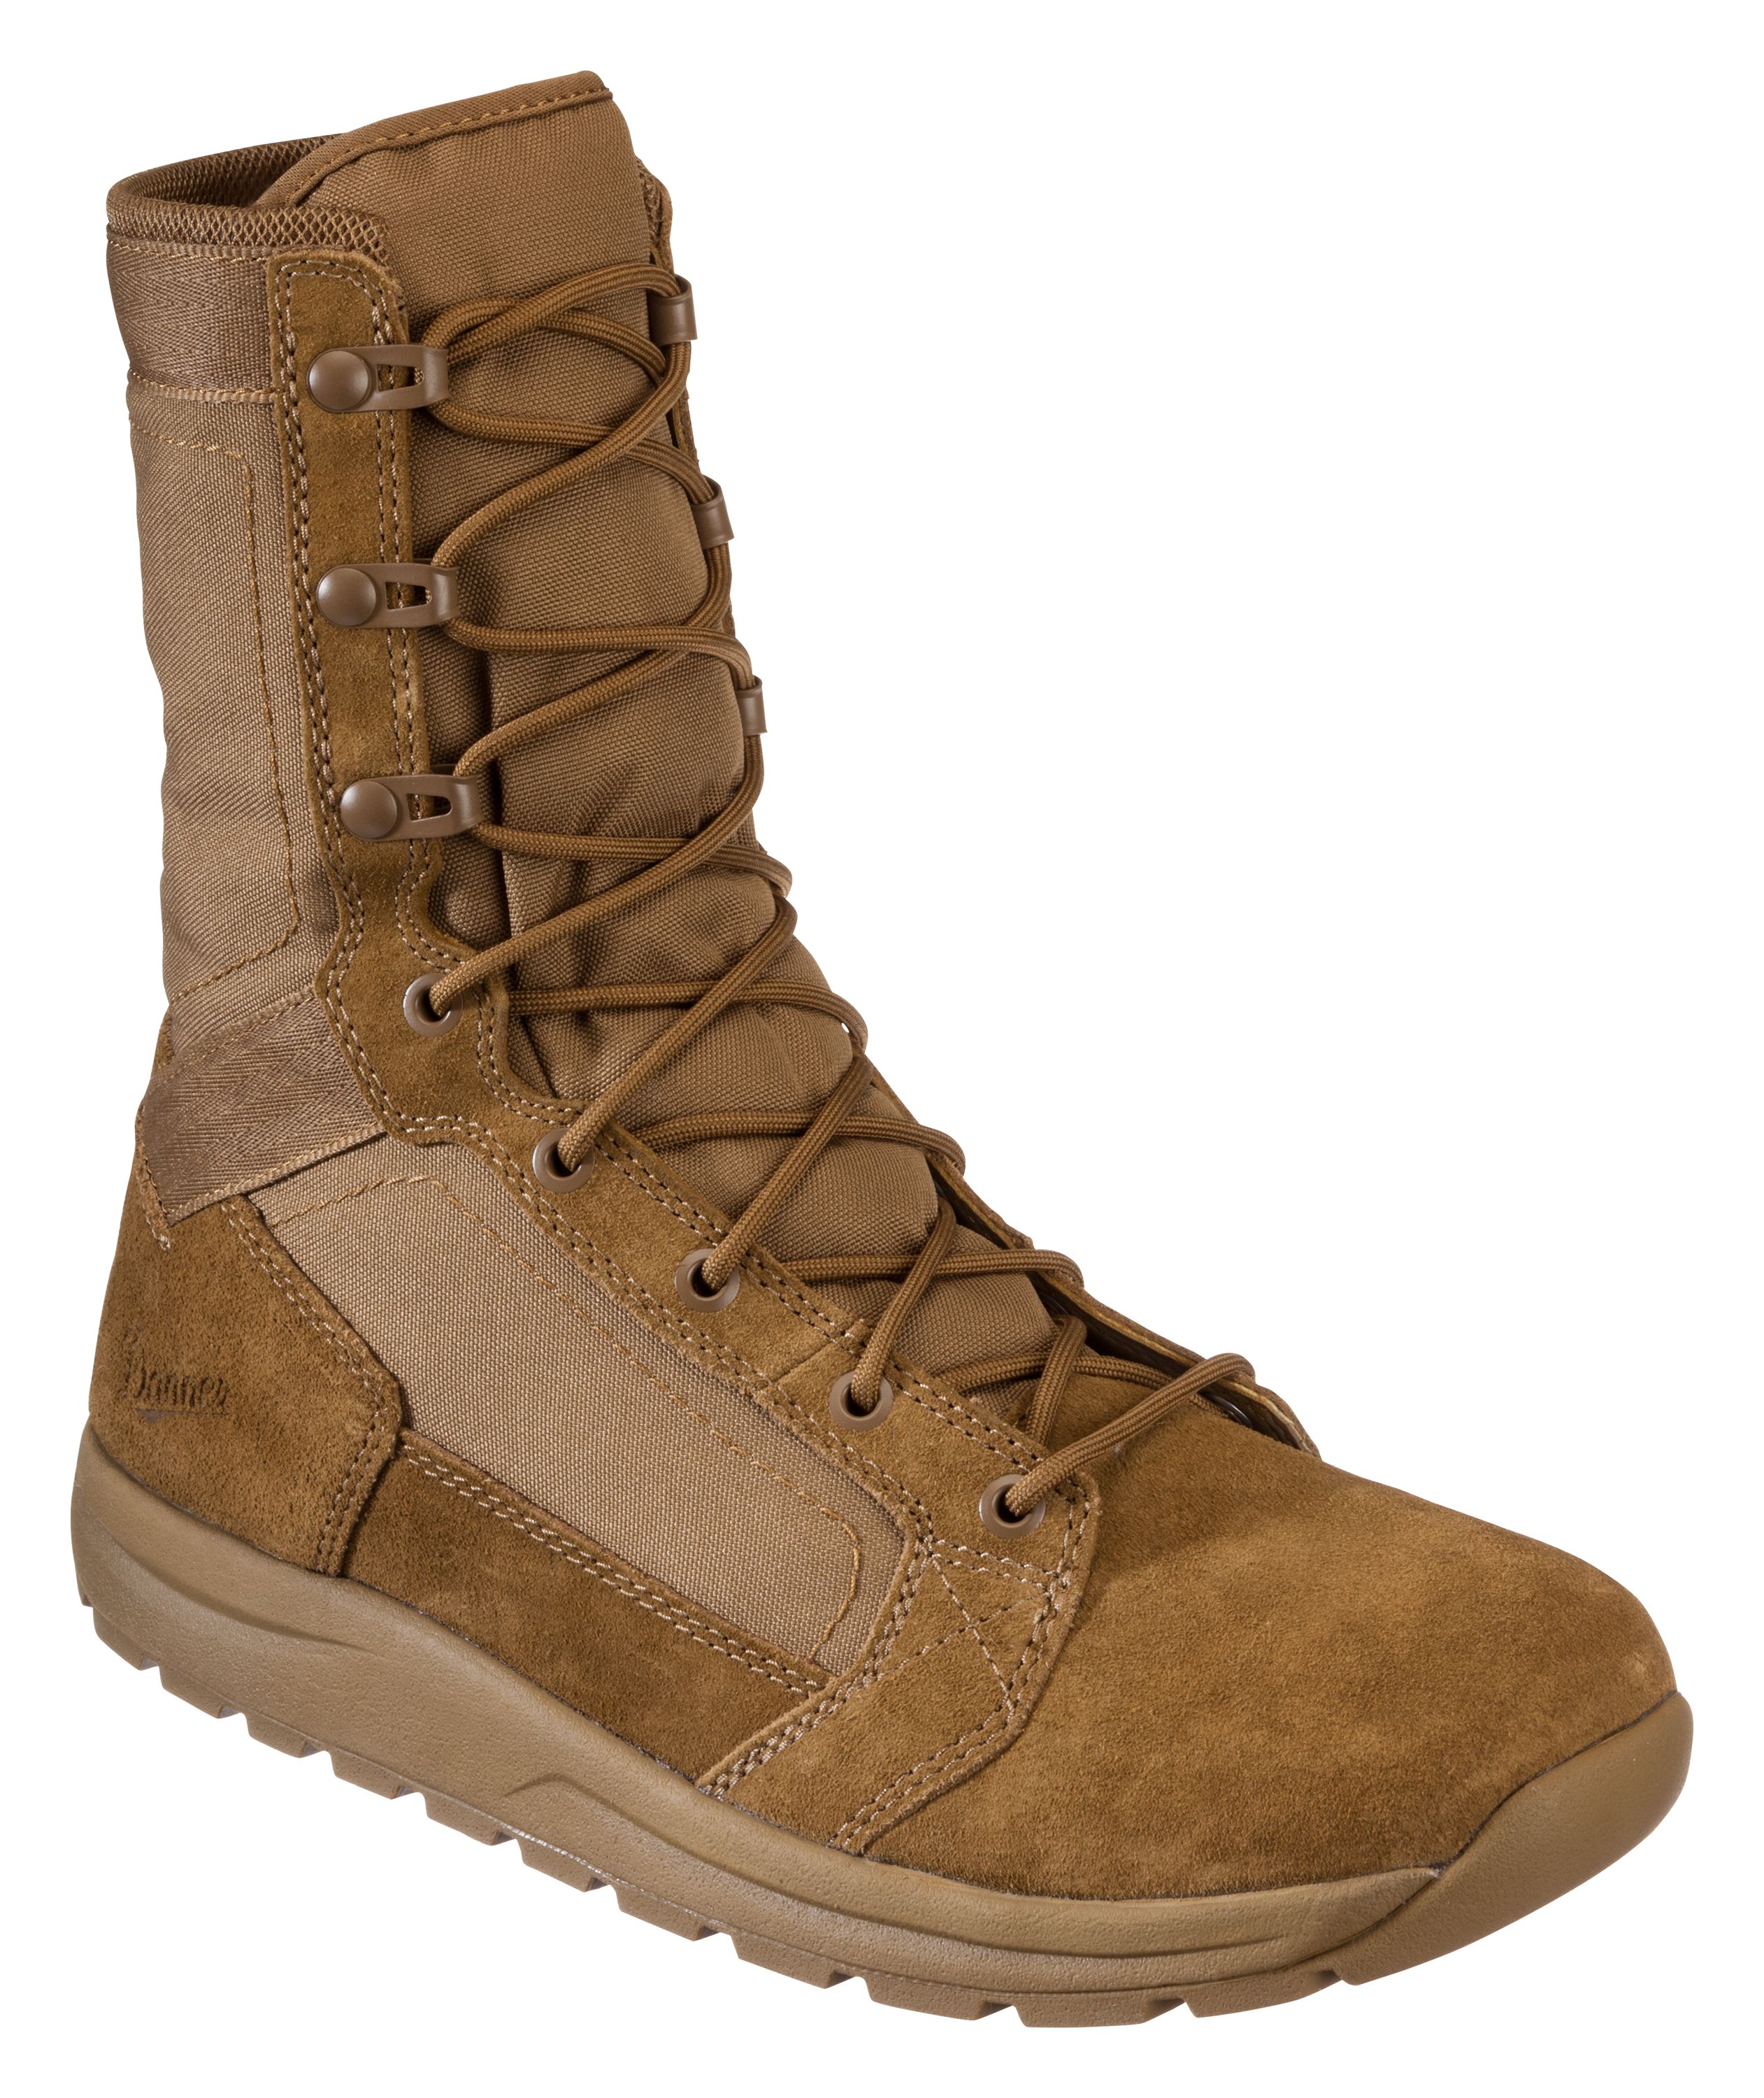 Danner Tachyon Tactical Boots for Men - Coyote - 10.5W